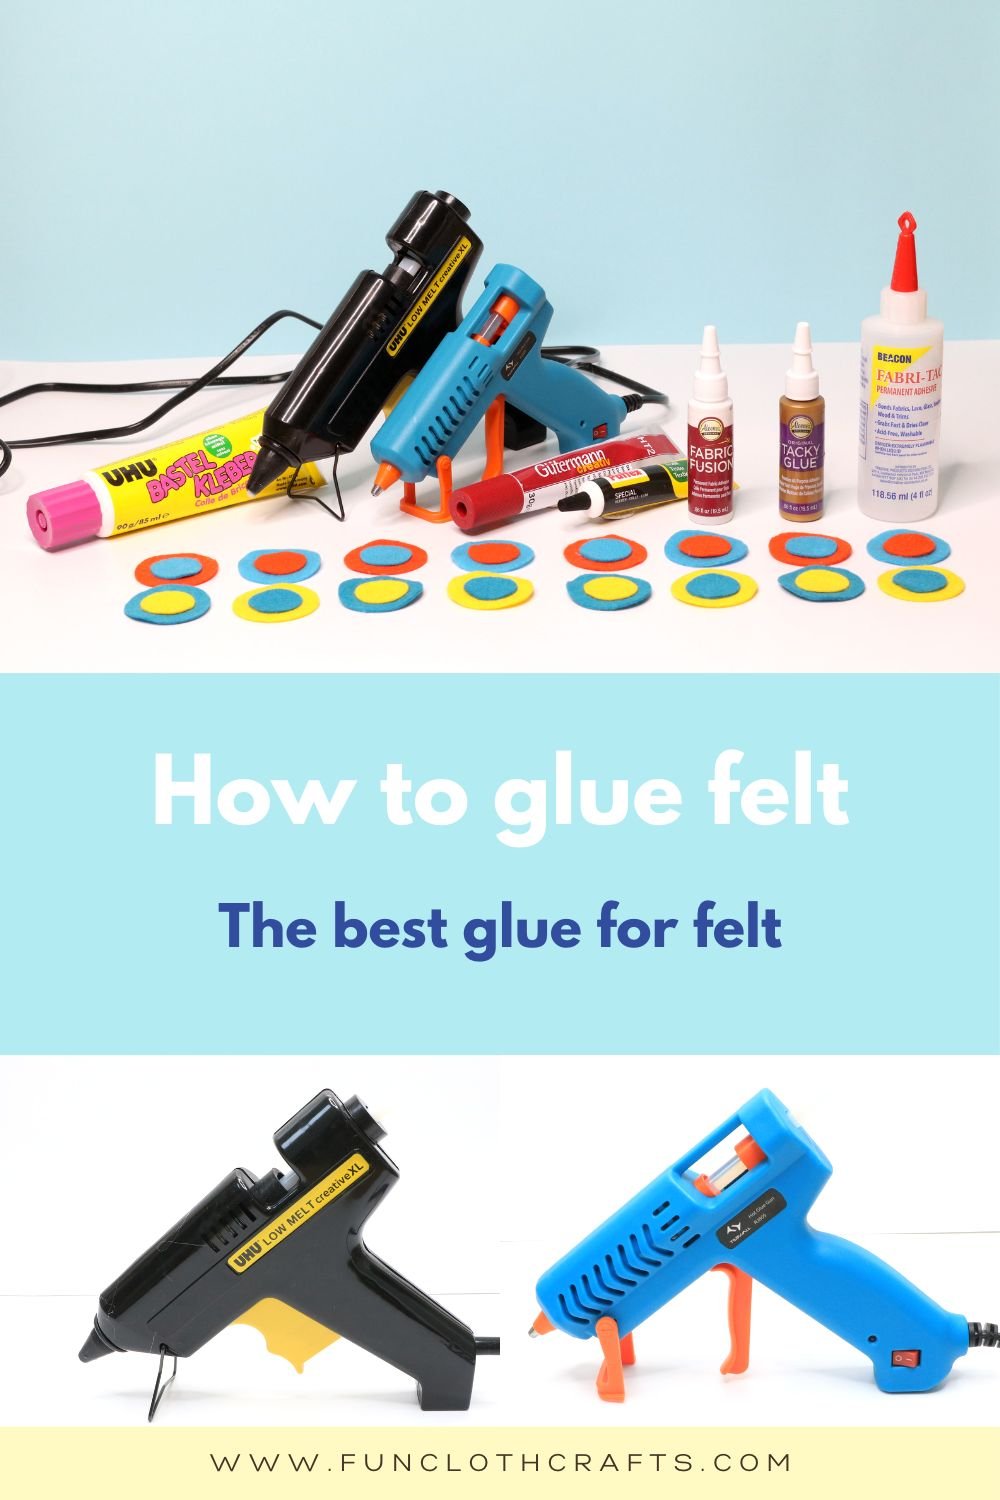 LIKEM Quick-drying glue stick quick-drying glue sticks for